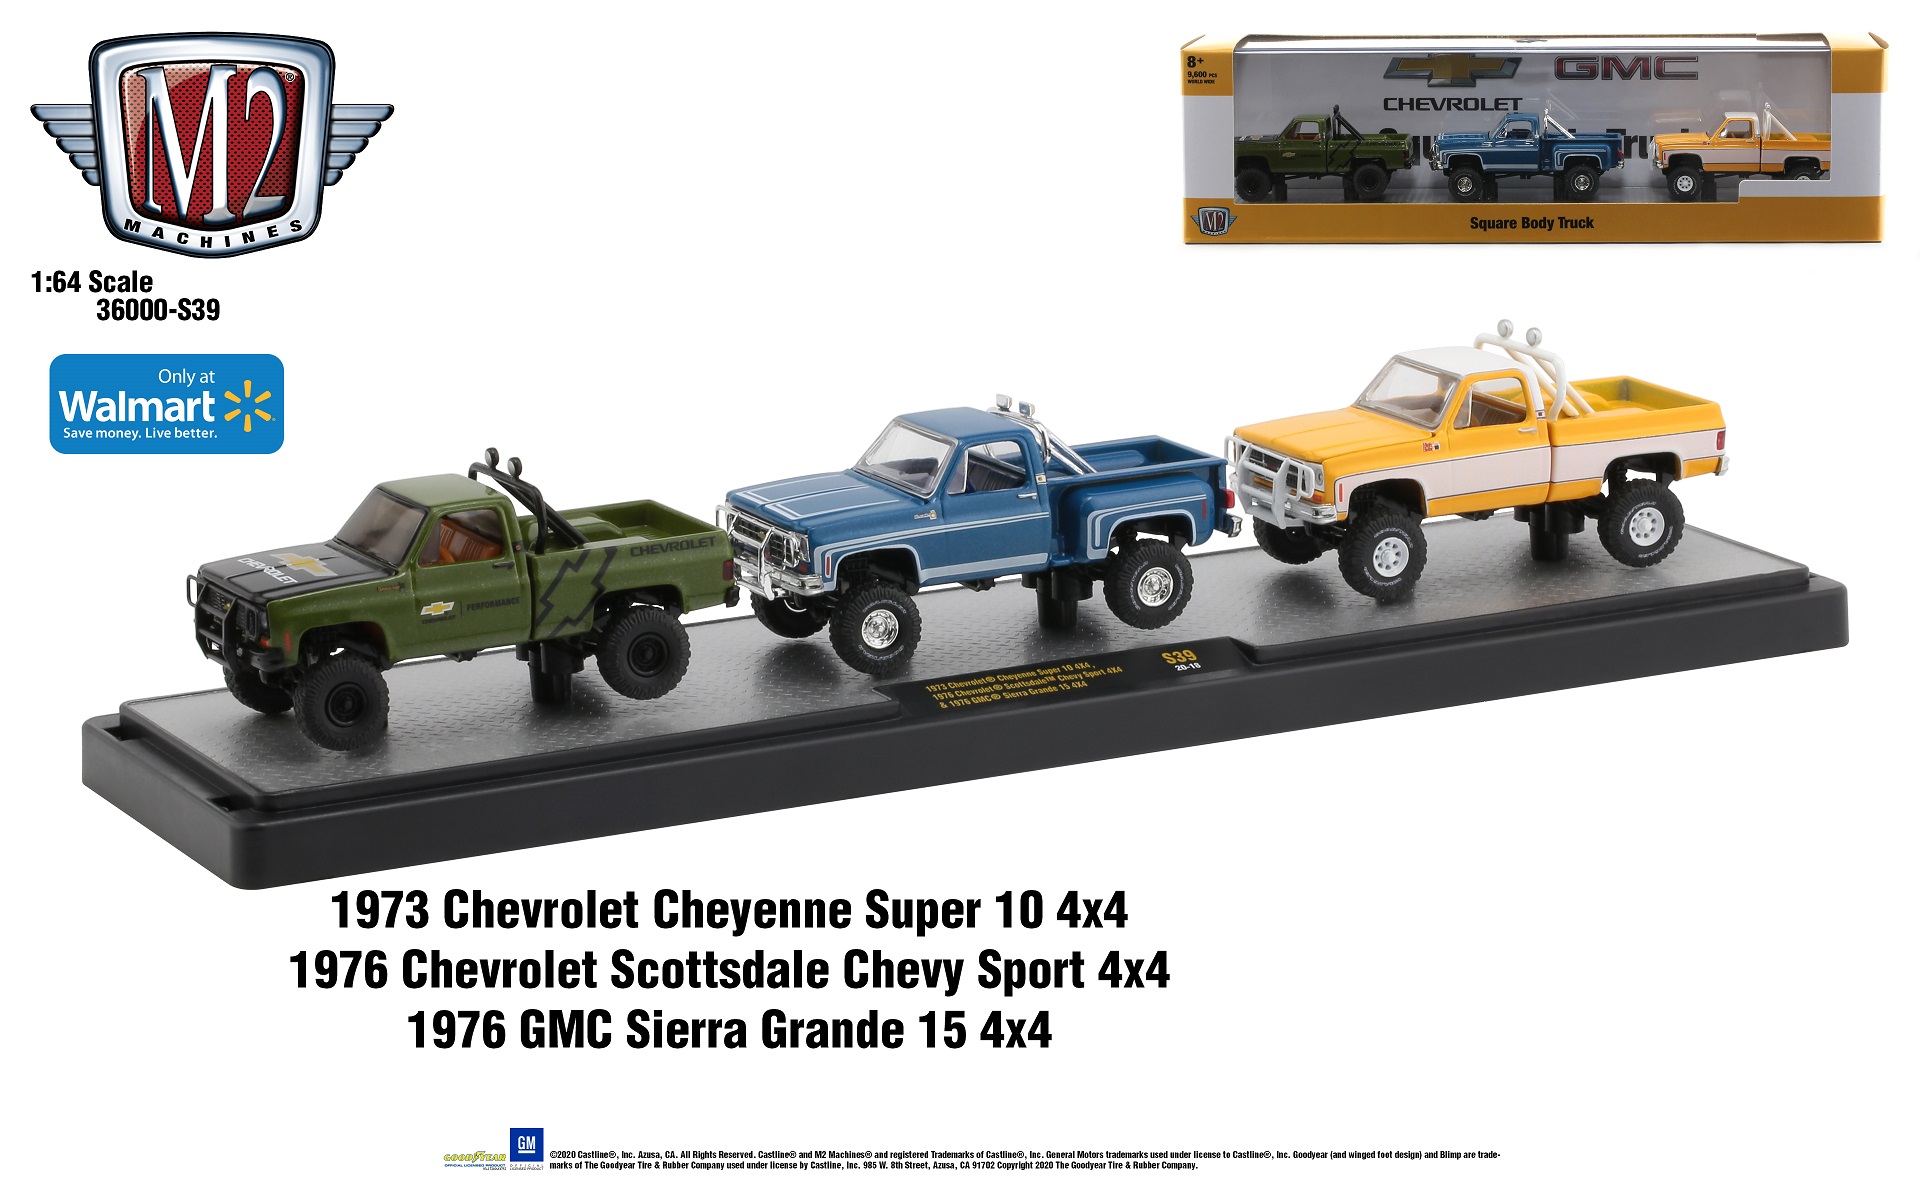 1976 Chevrolet Scottsdale Chevy Sport 4x4 | M2 Machines Wiki | Fandom